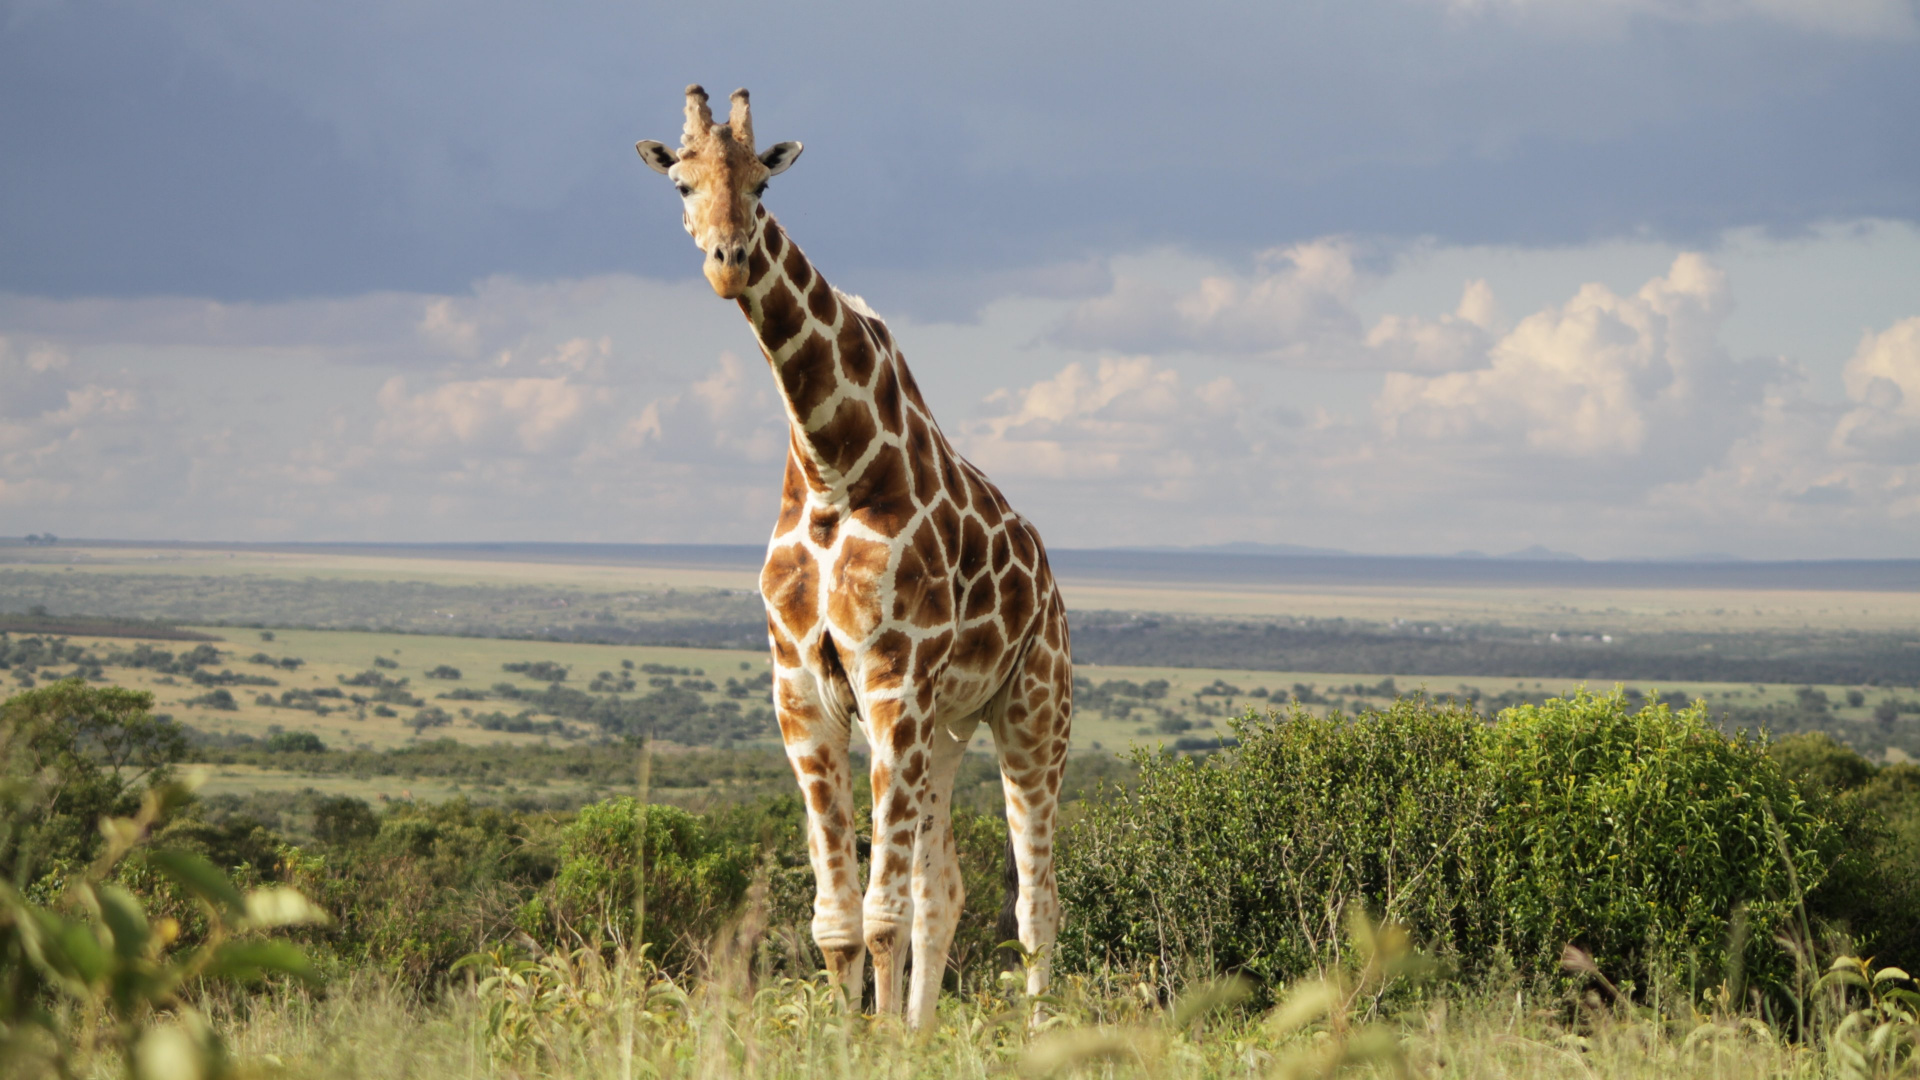 Giraffe Standing on Green Grass Field During Daytime. Wallpaper in 1920x1080 Resolution